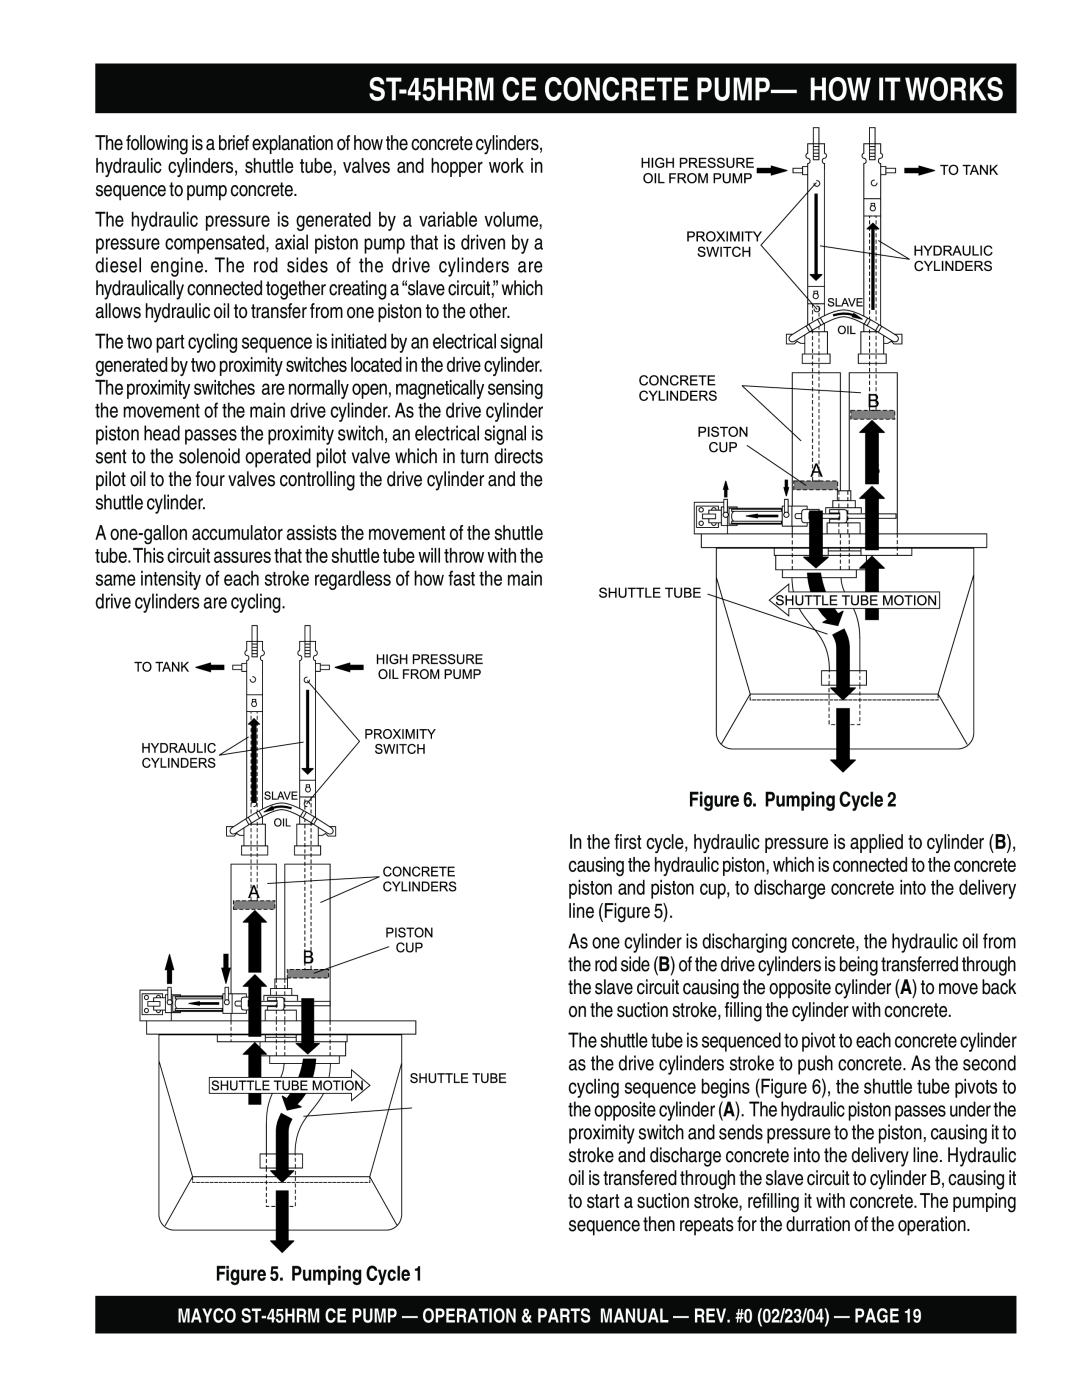 Multiquip ST-45HRM CE manual ST-45HRMCE CONCRETE PUMP— HOW IT WORKS, Pumping Cycle 